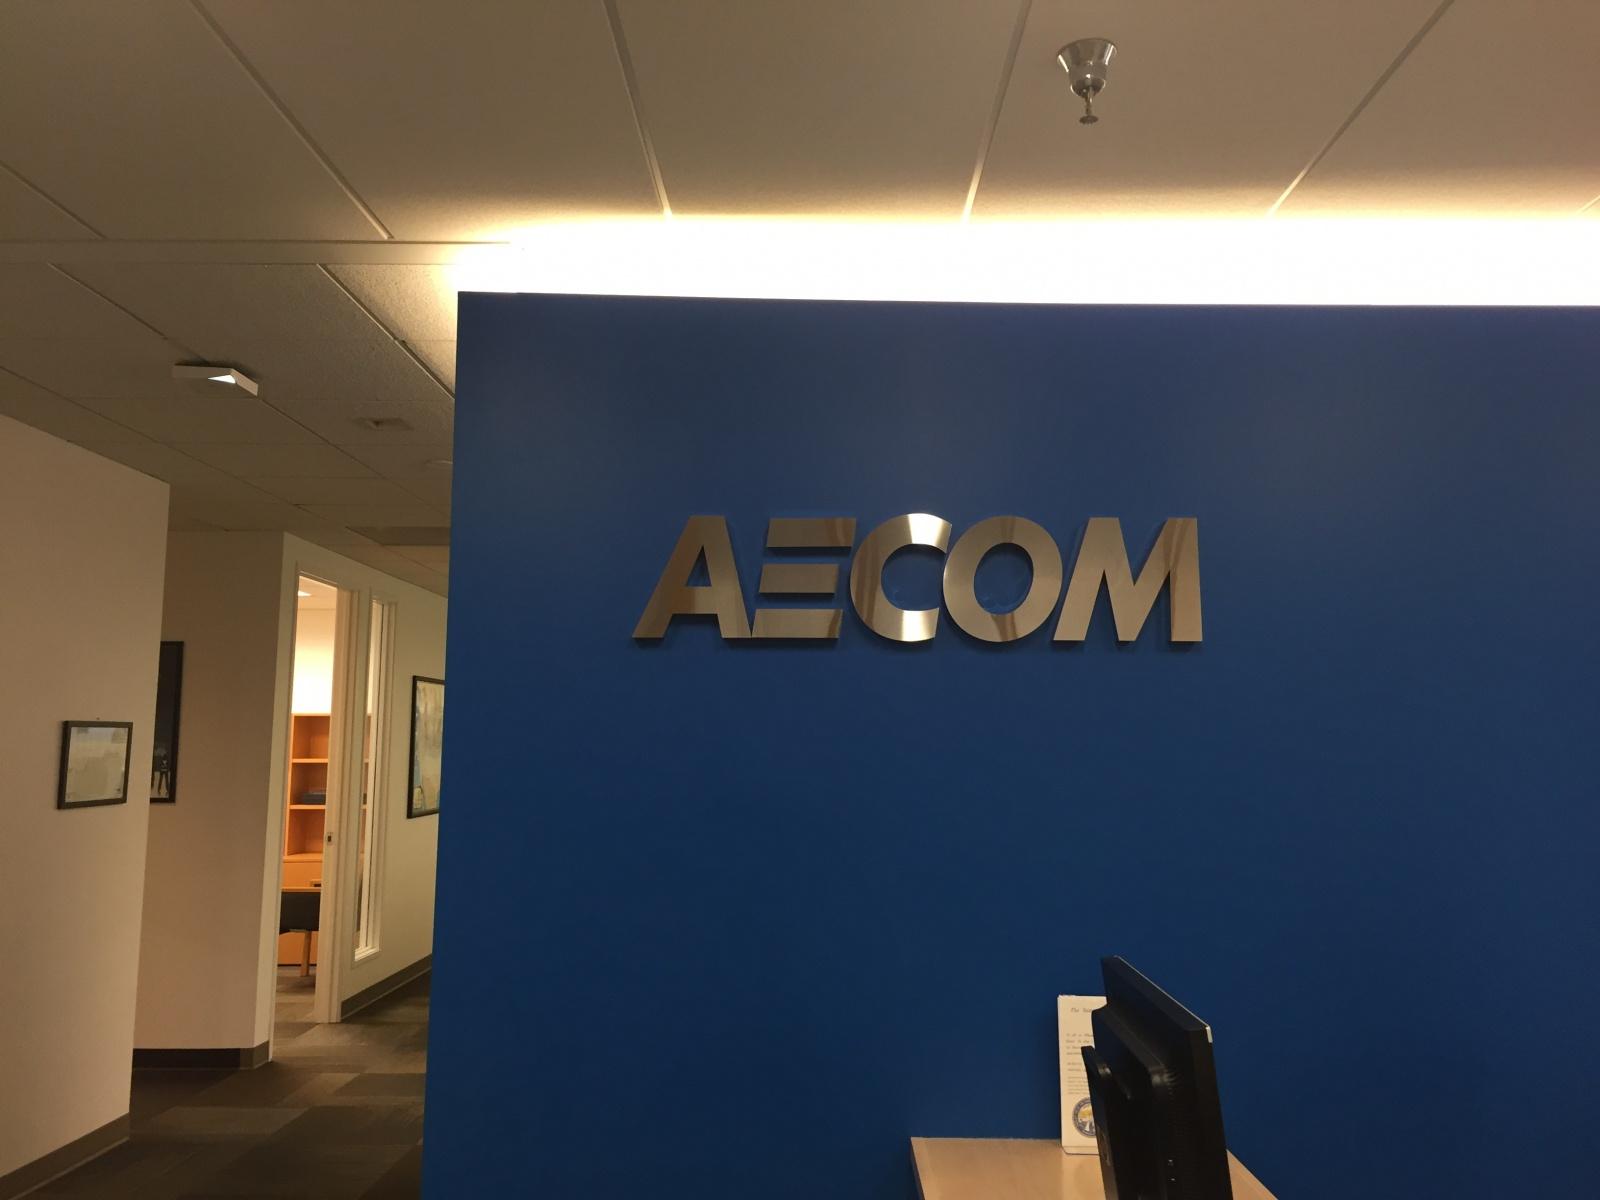 AECOM corporate signage